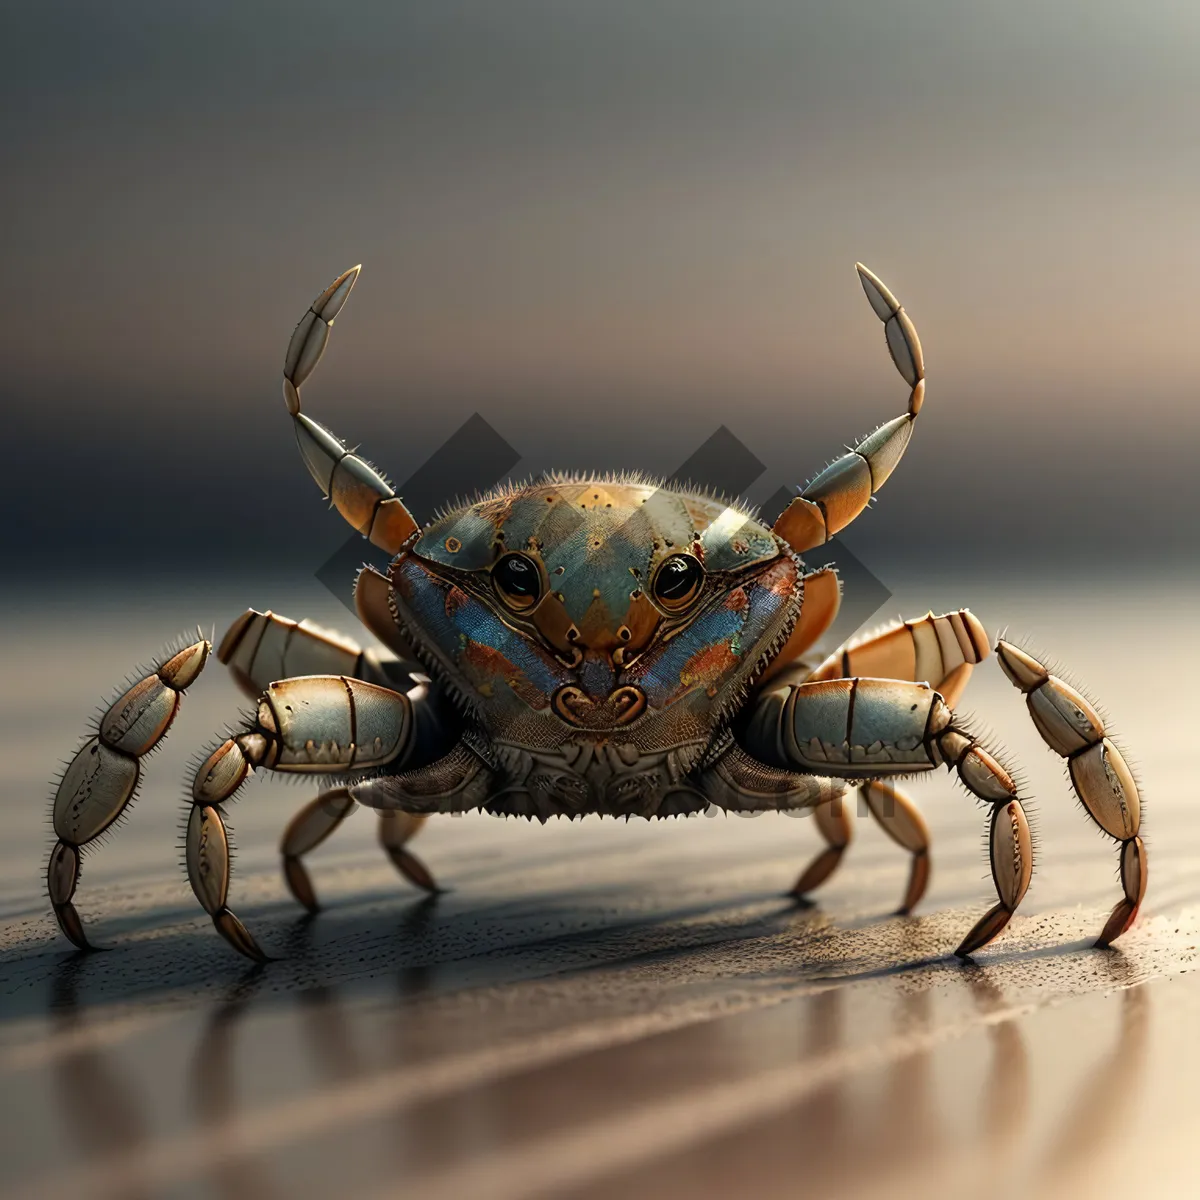 Picture of Creepy Crawlers: Black Arachnid on Rock